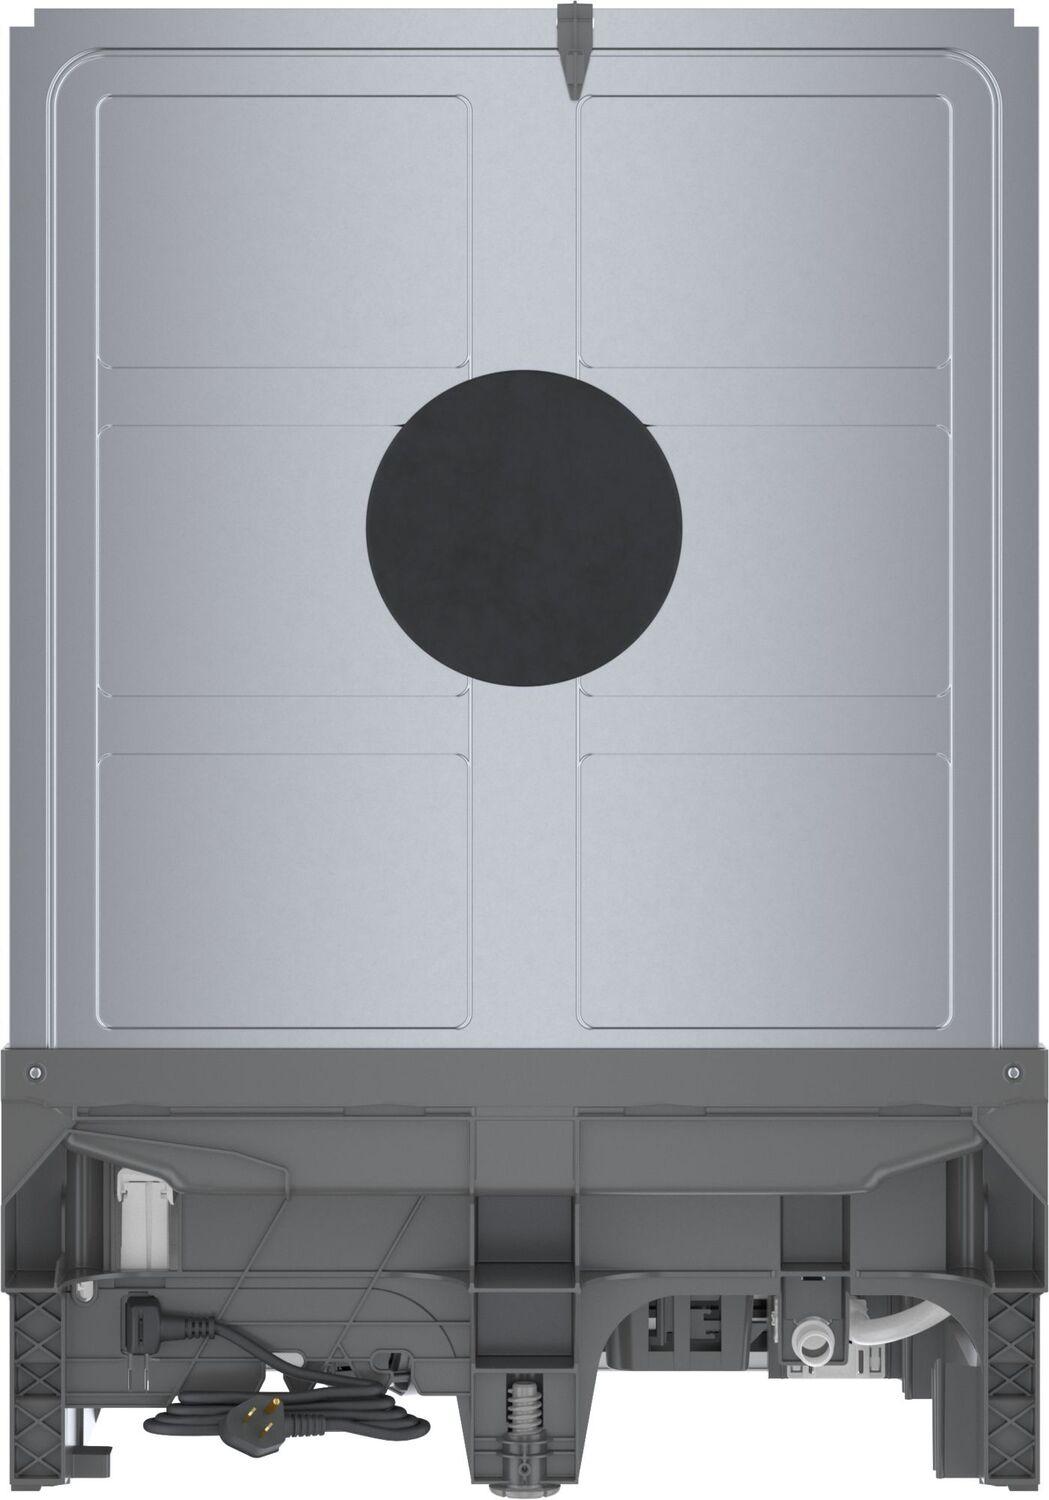 Bosch SHE3AEM2N 100 Series Dishwasher 24" White